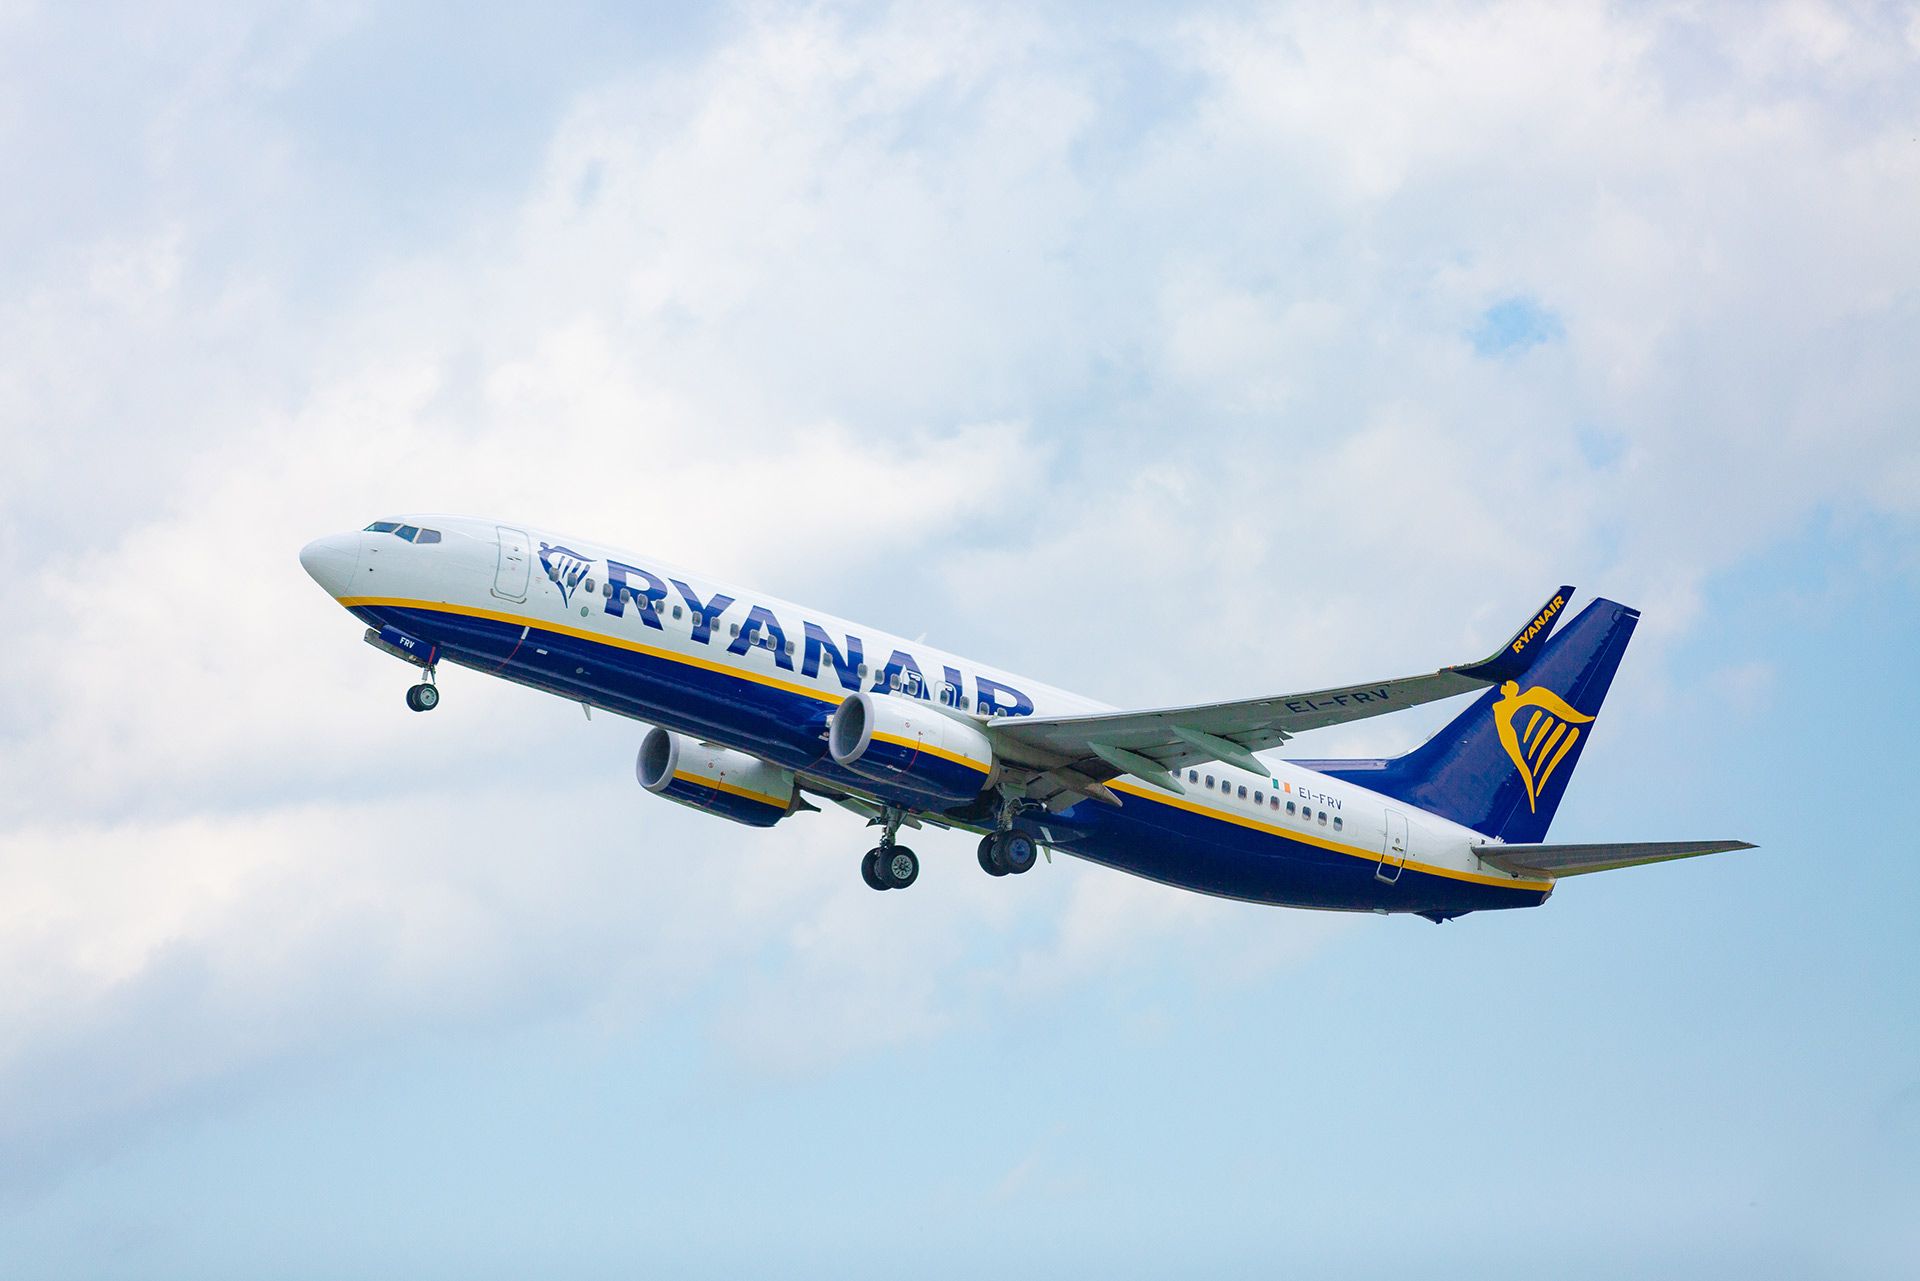 Ryanair Boeing 737-800 taking off